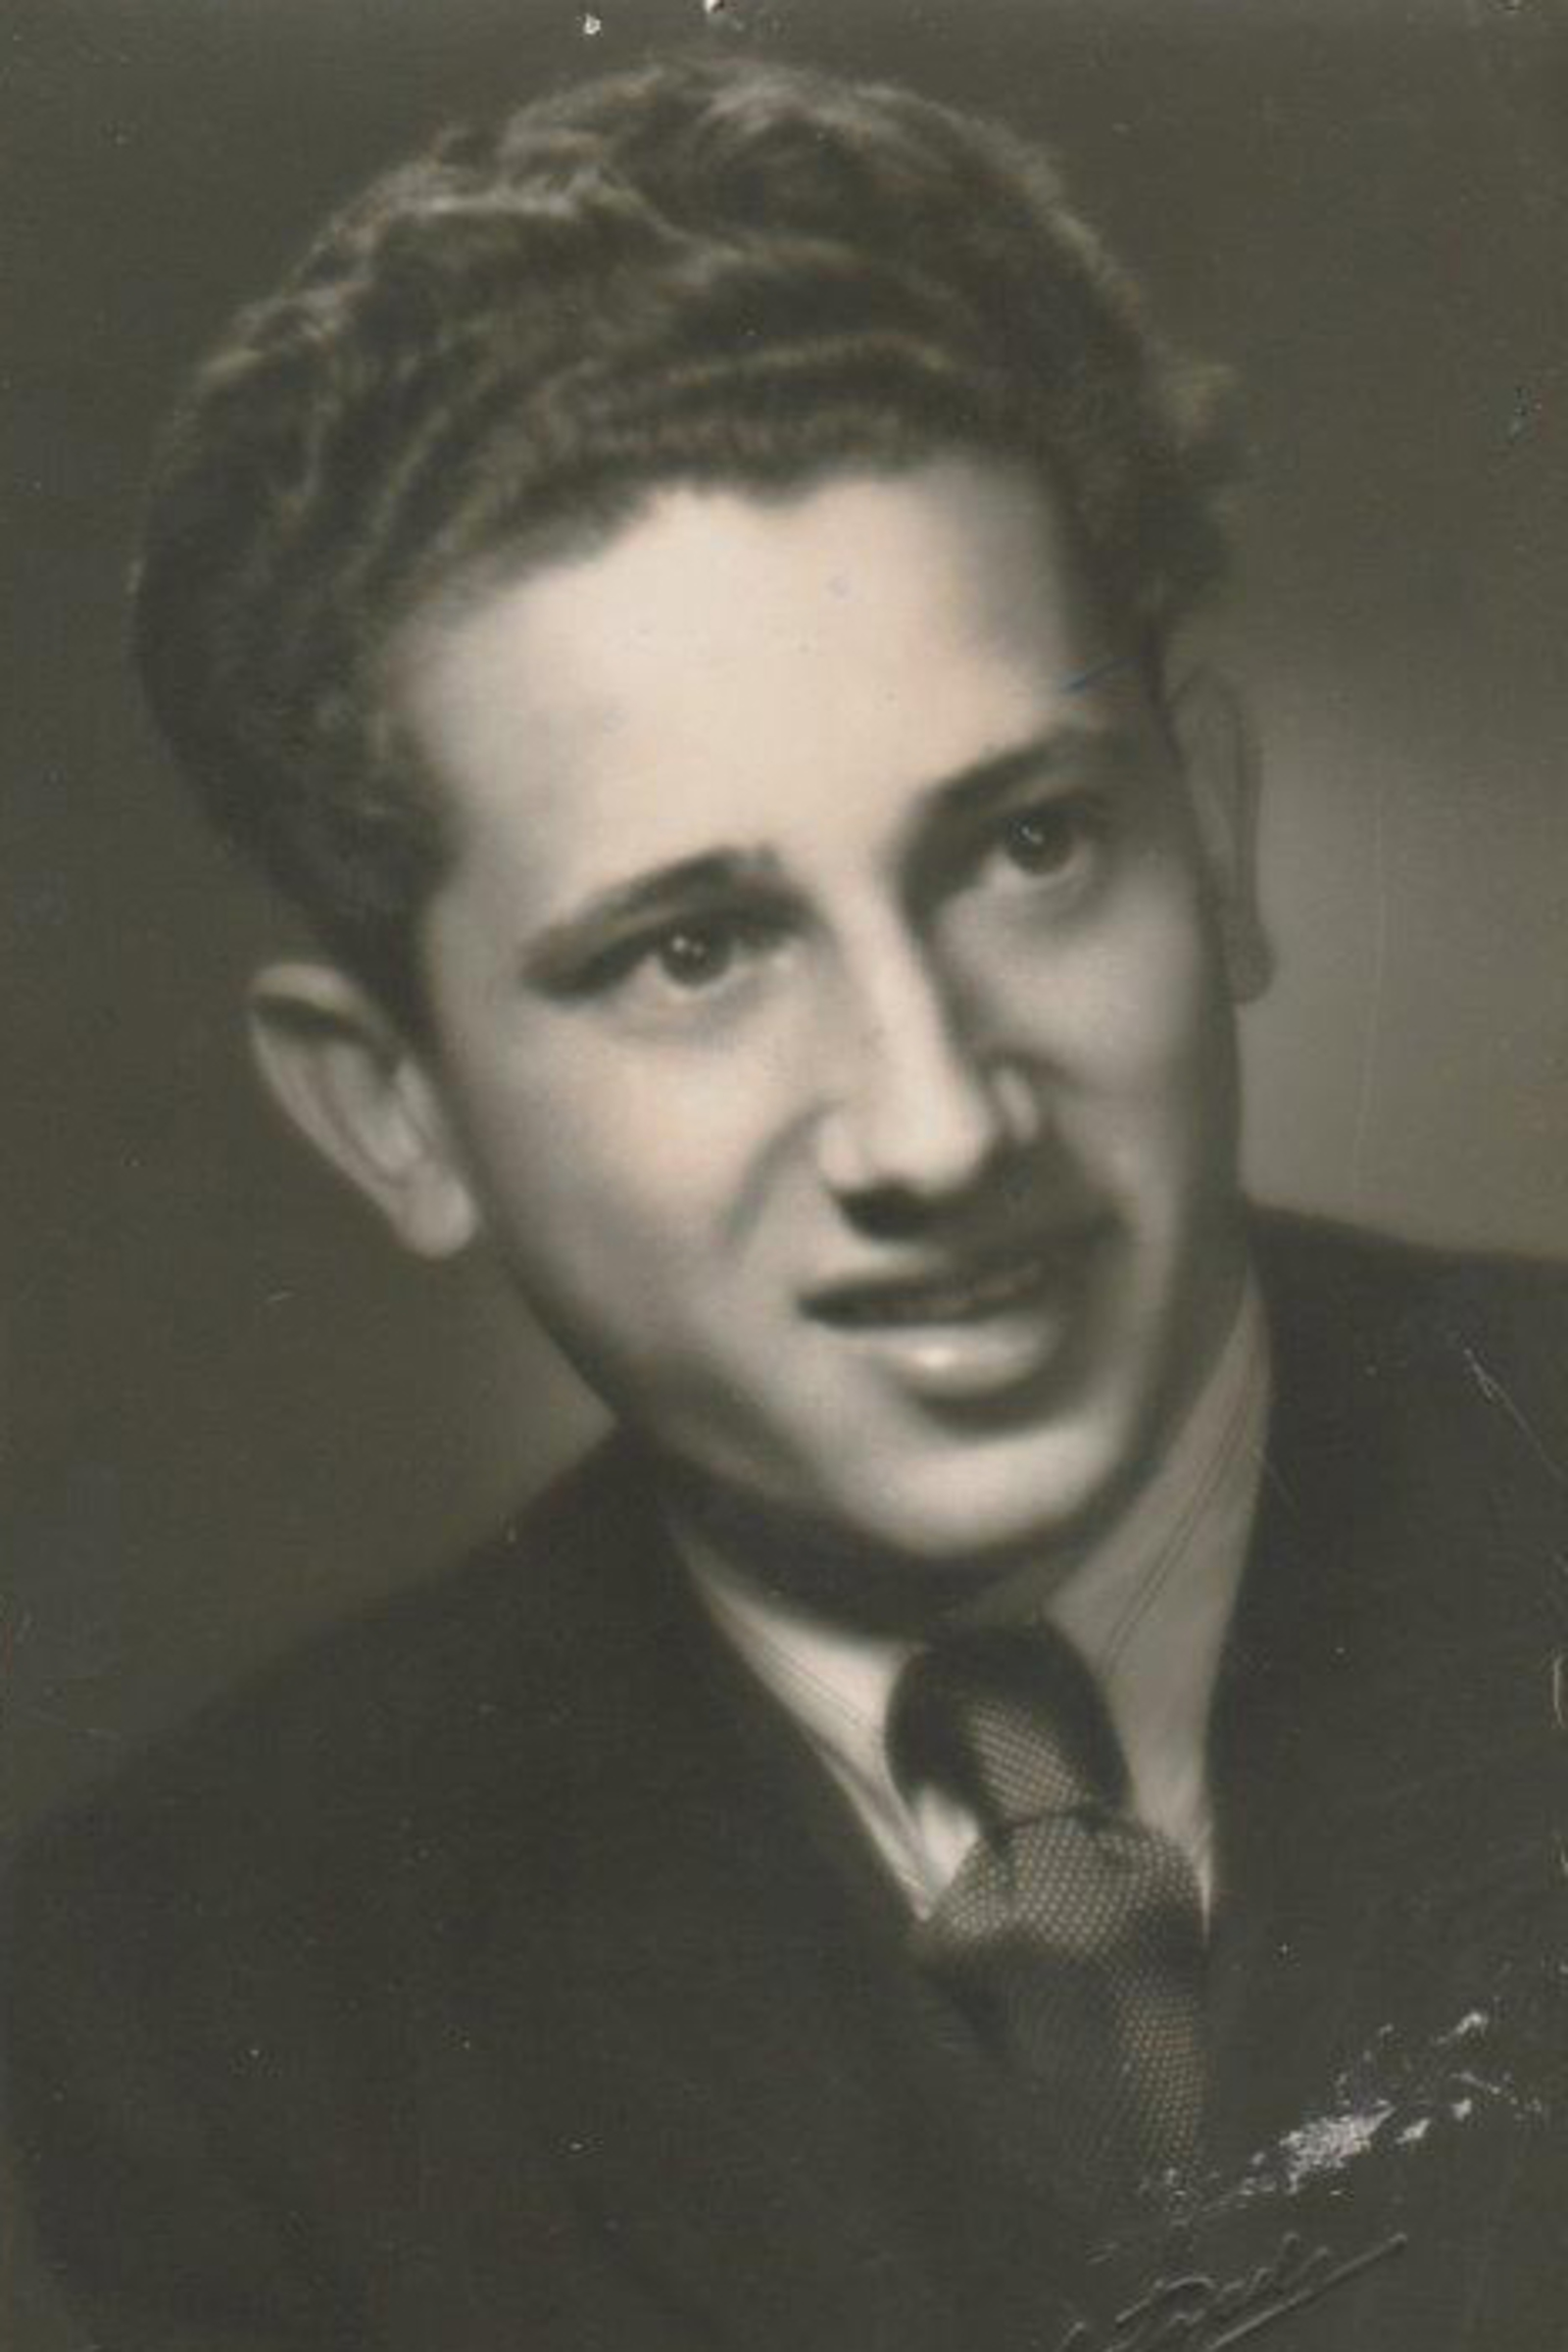 1948 - graduation photo